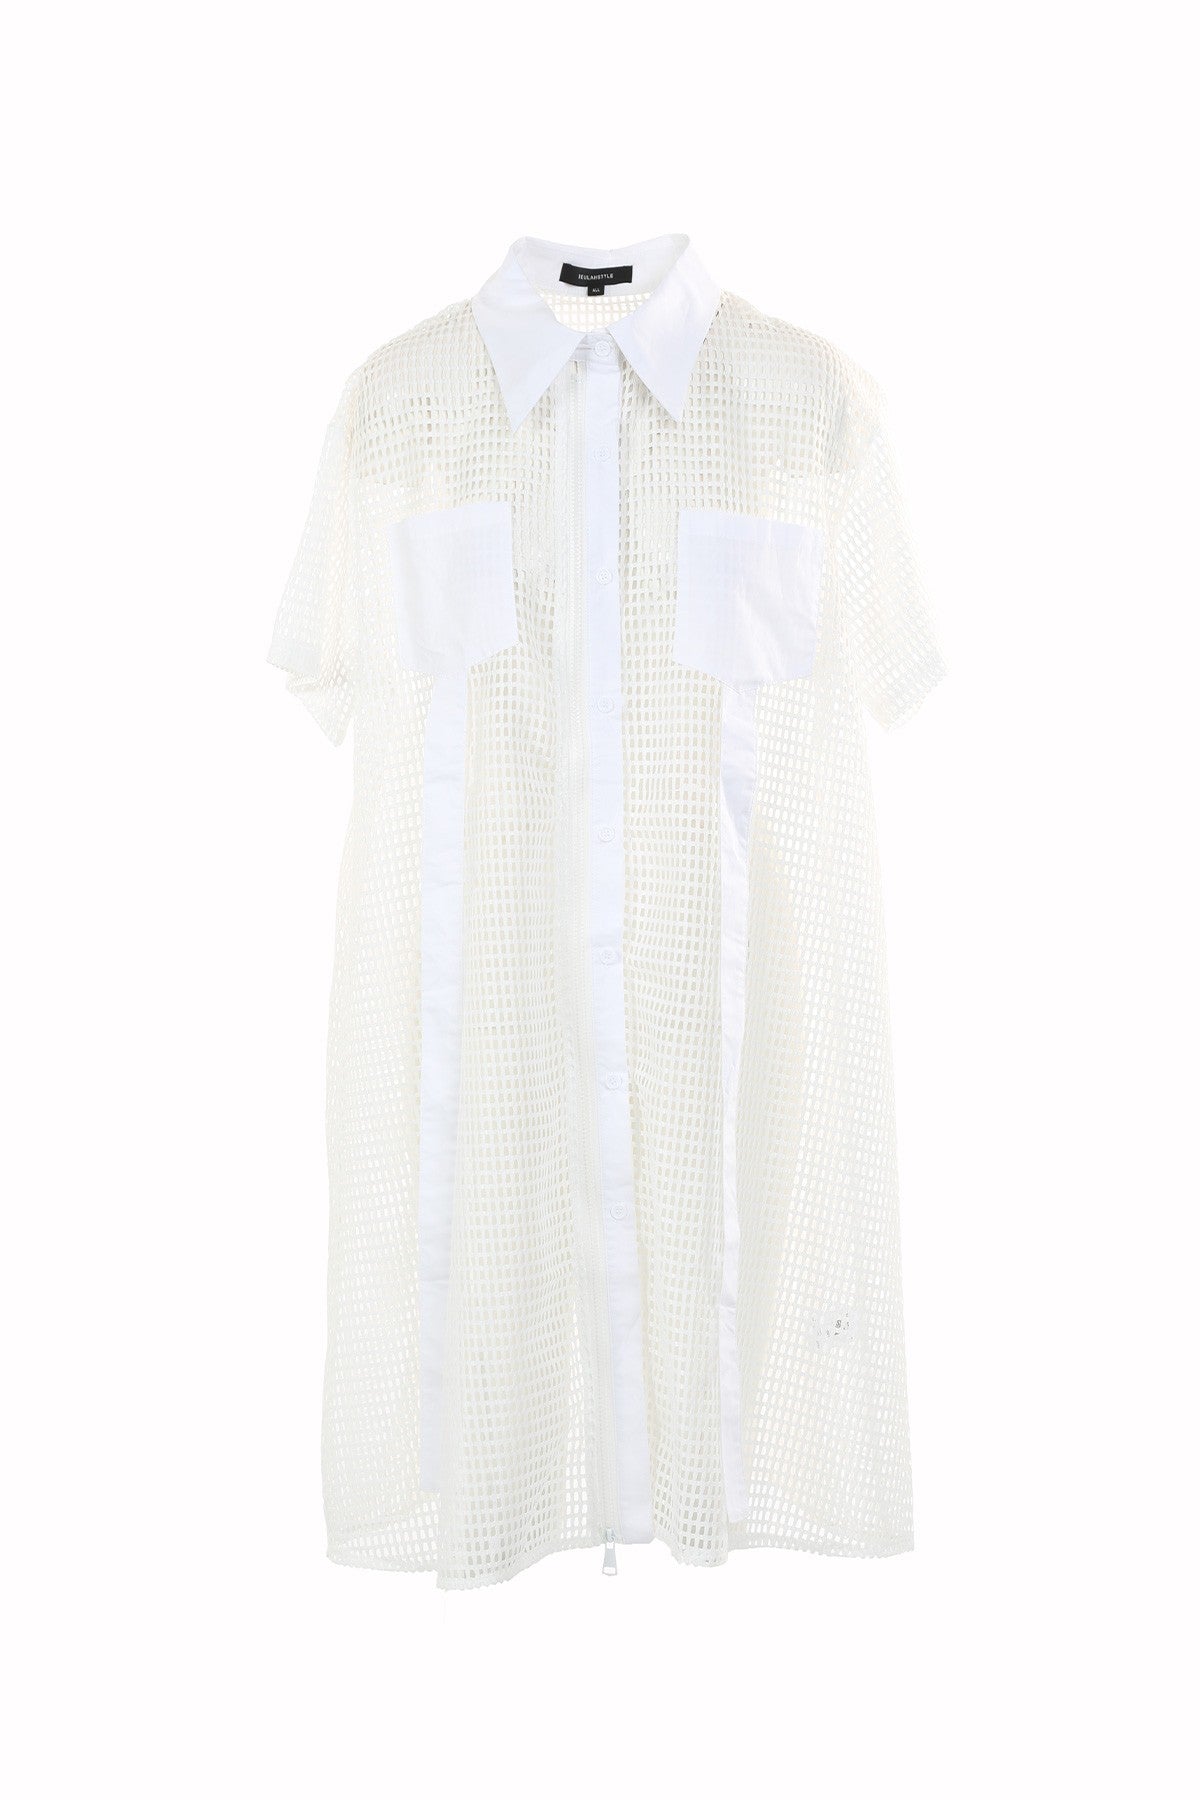 Rectangular Lace Hollow Out Net Midi Shirt Dress